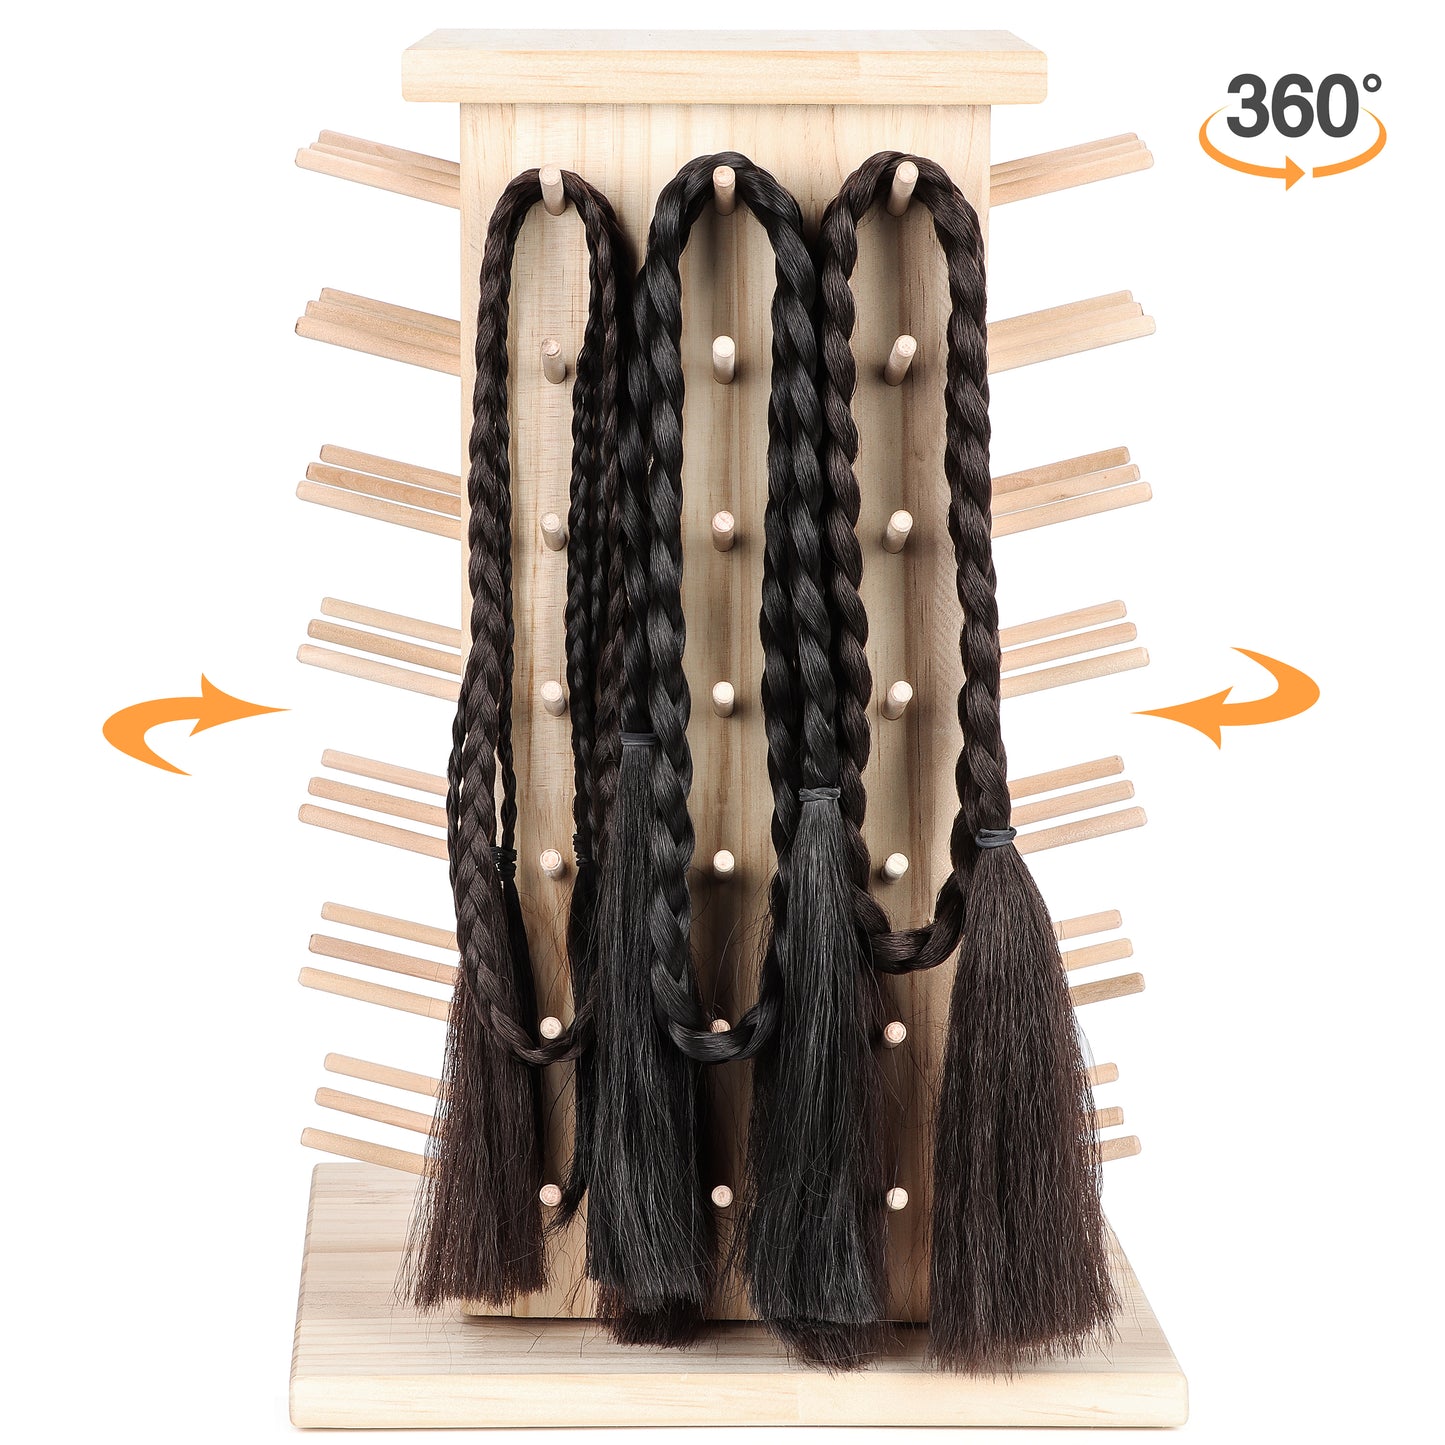 New brothread 84 Spools 360° Fully Rotating Wooden Thread Rack /Thread Holder Organizer